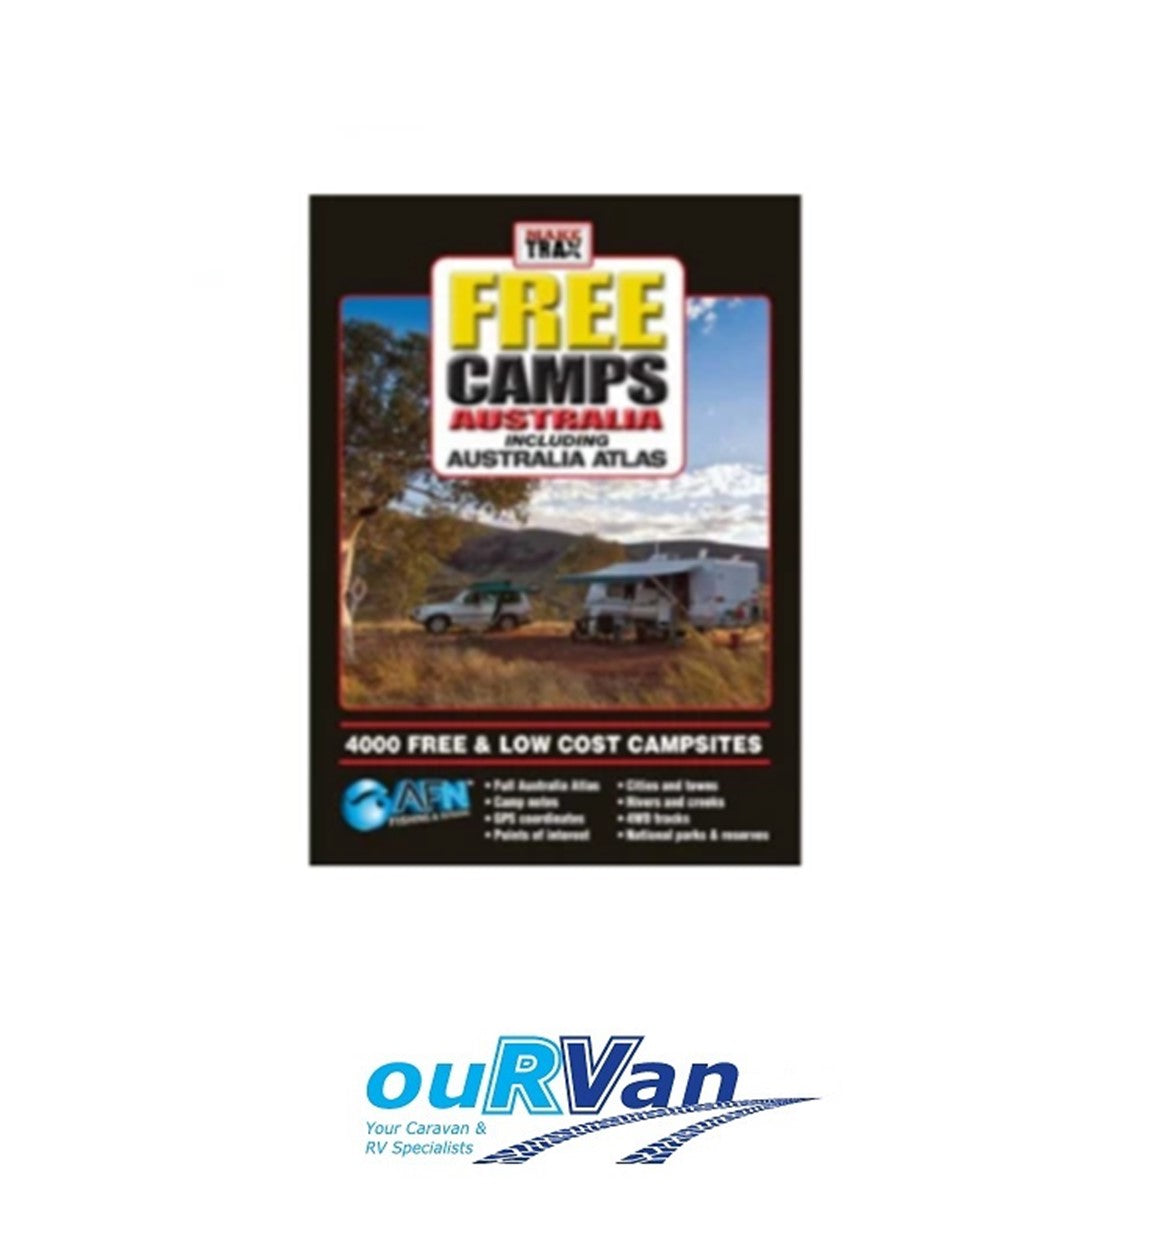 MAKE TRAX FREE CAMPS AUSTRALIA BOOK 044074 CARAVAN CAMPING MOTORHOME RV